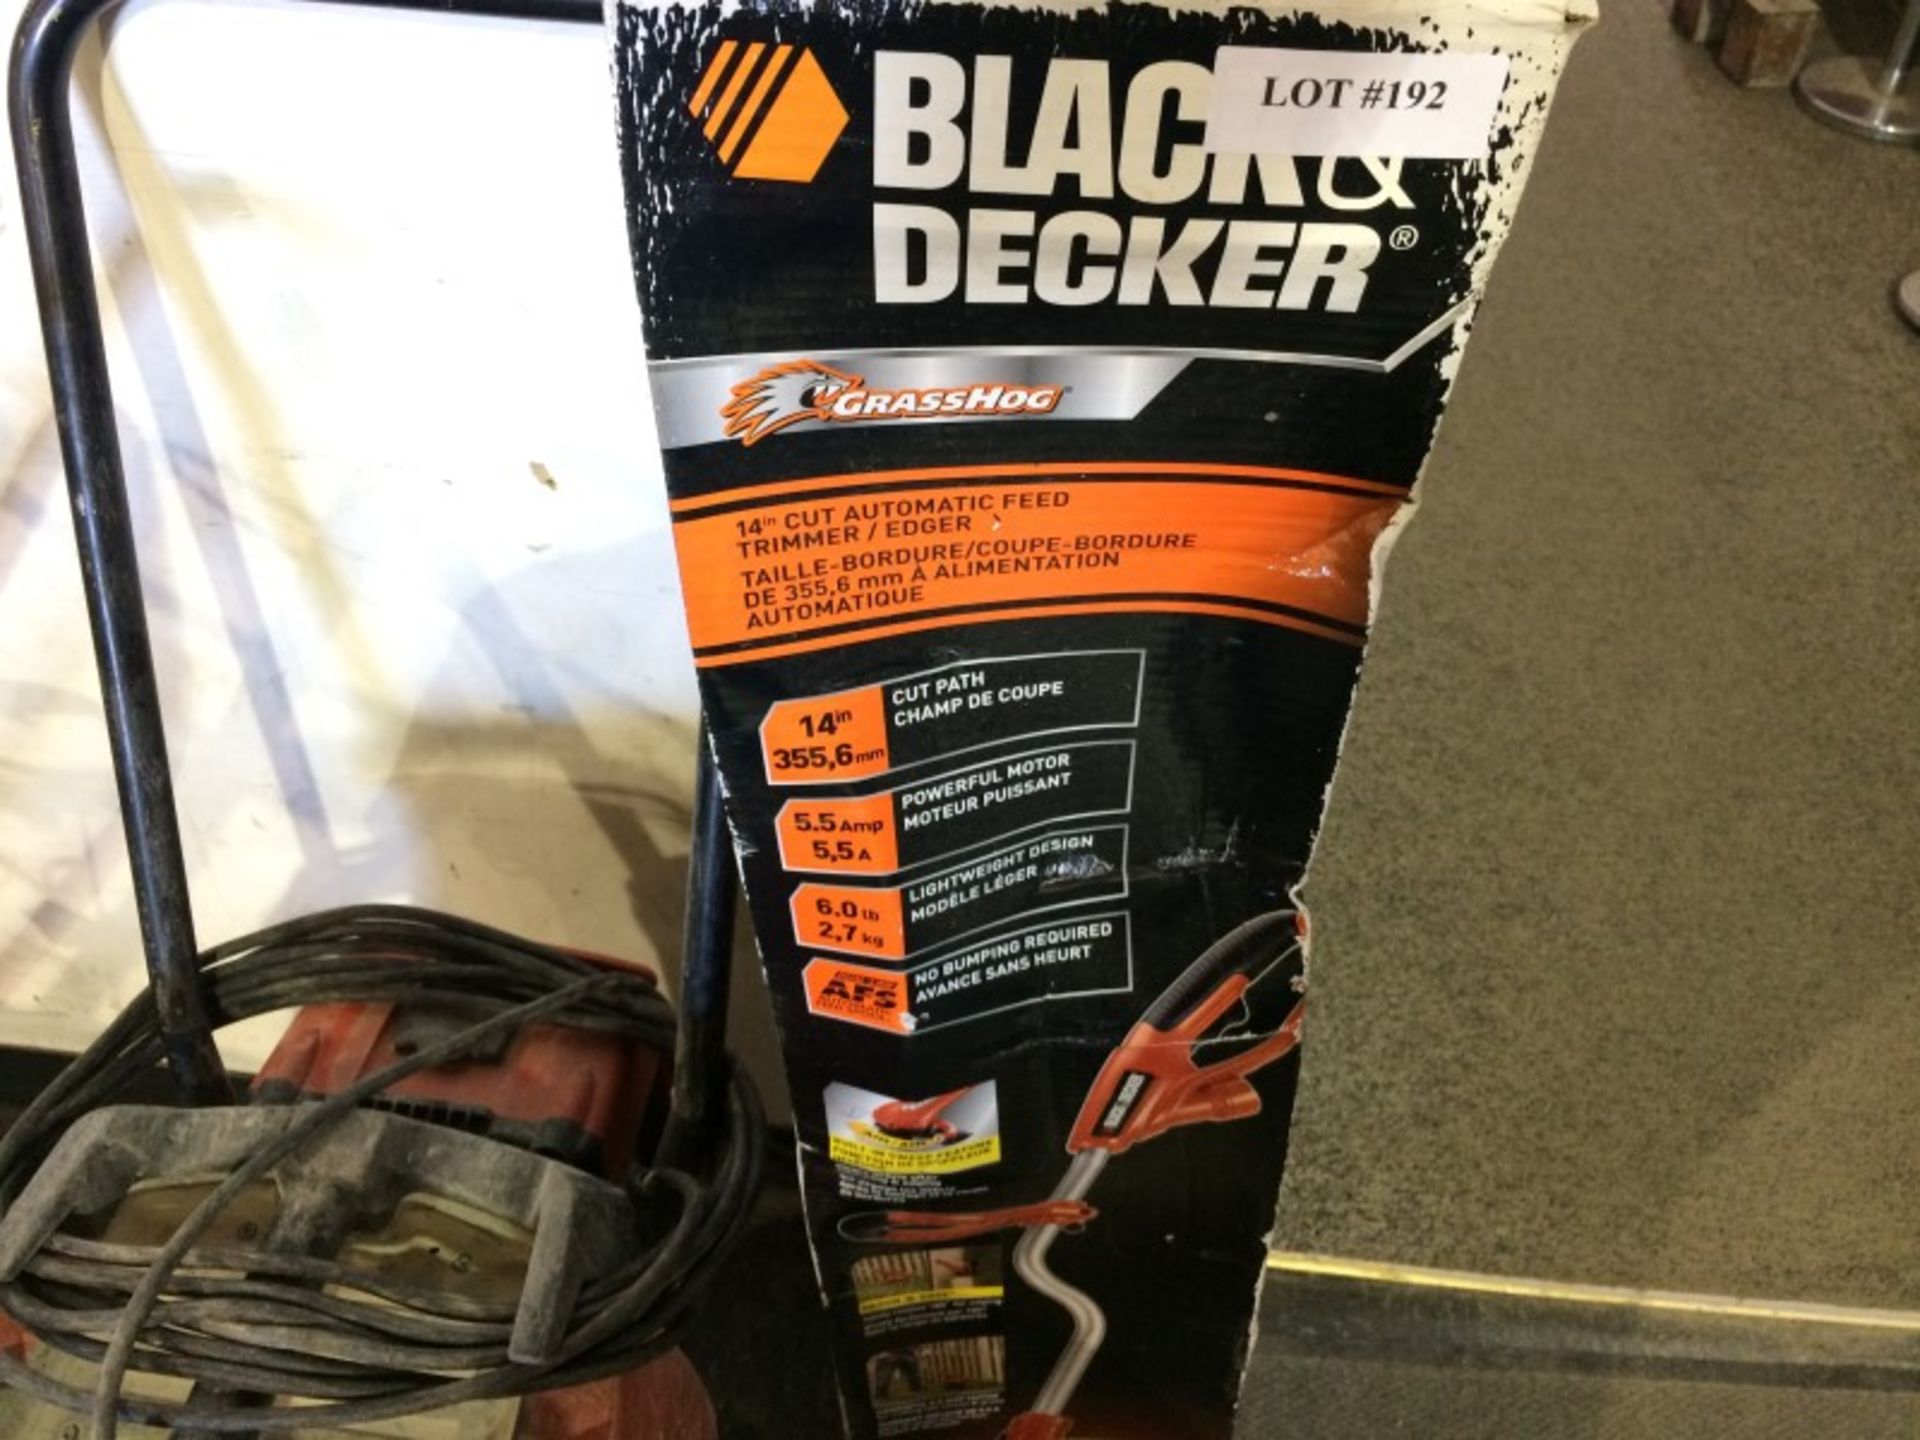 Black & Decker 14" Cut Automatic Feed Trimmer/Edger